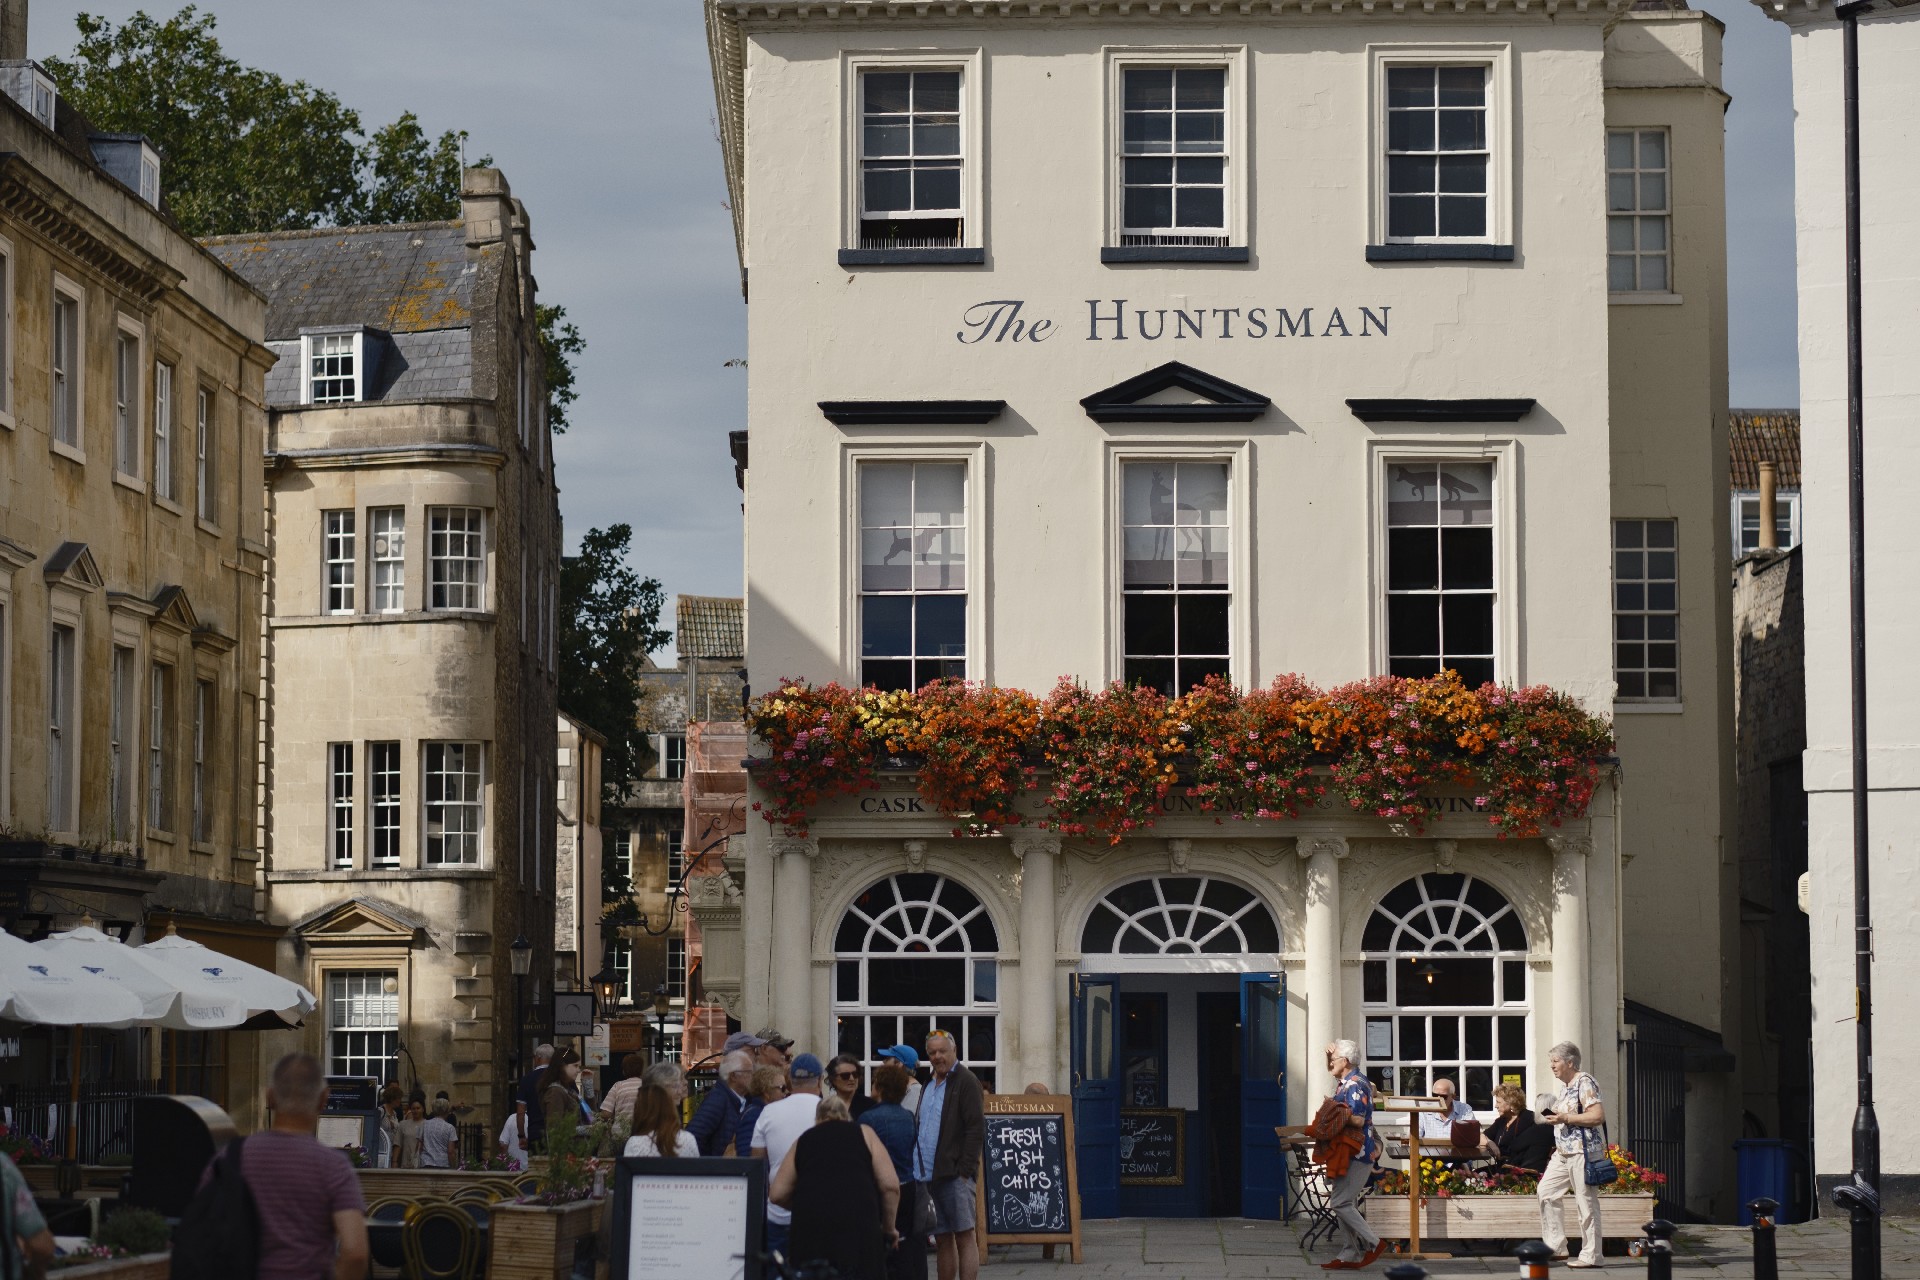 The Huntsman - Fuller's Pub and Restaurant in Bath